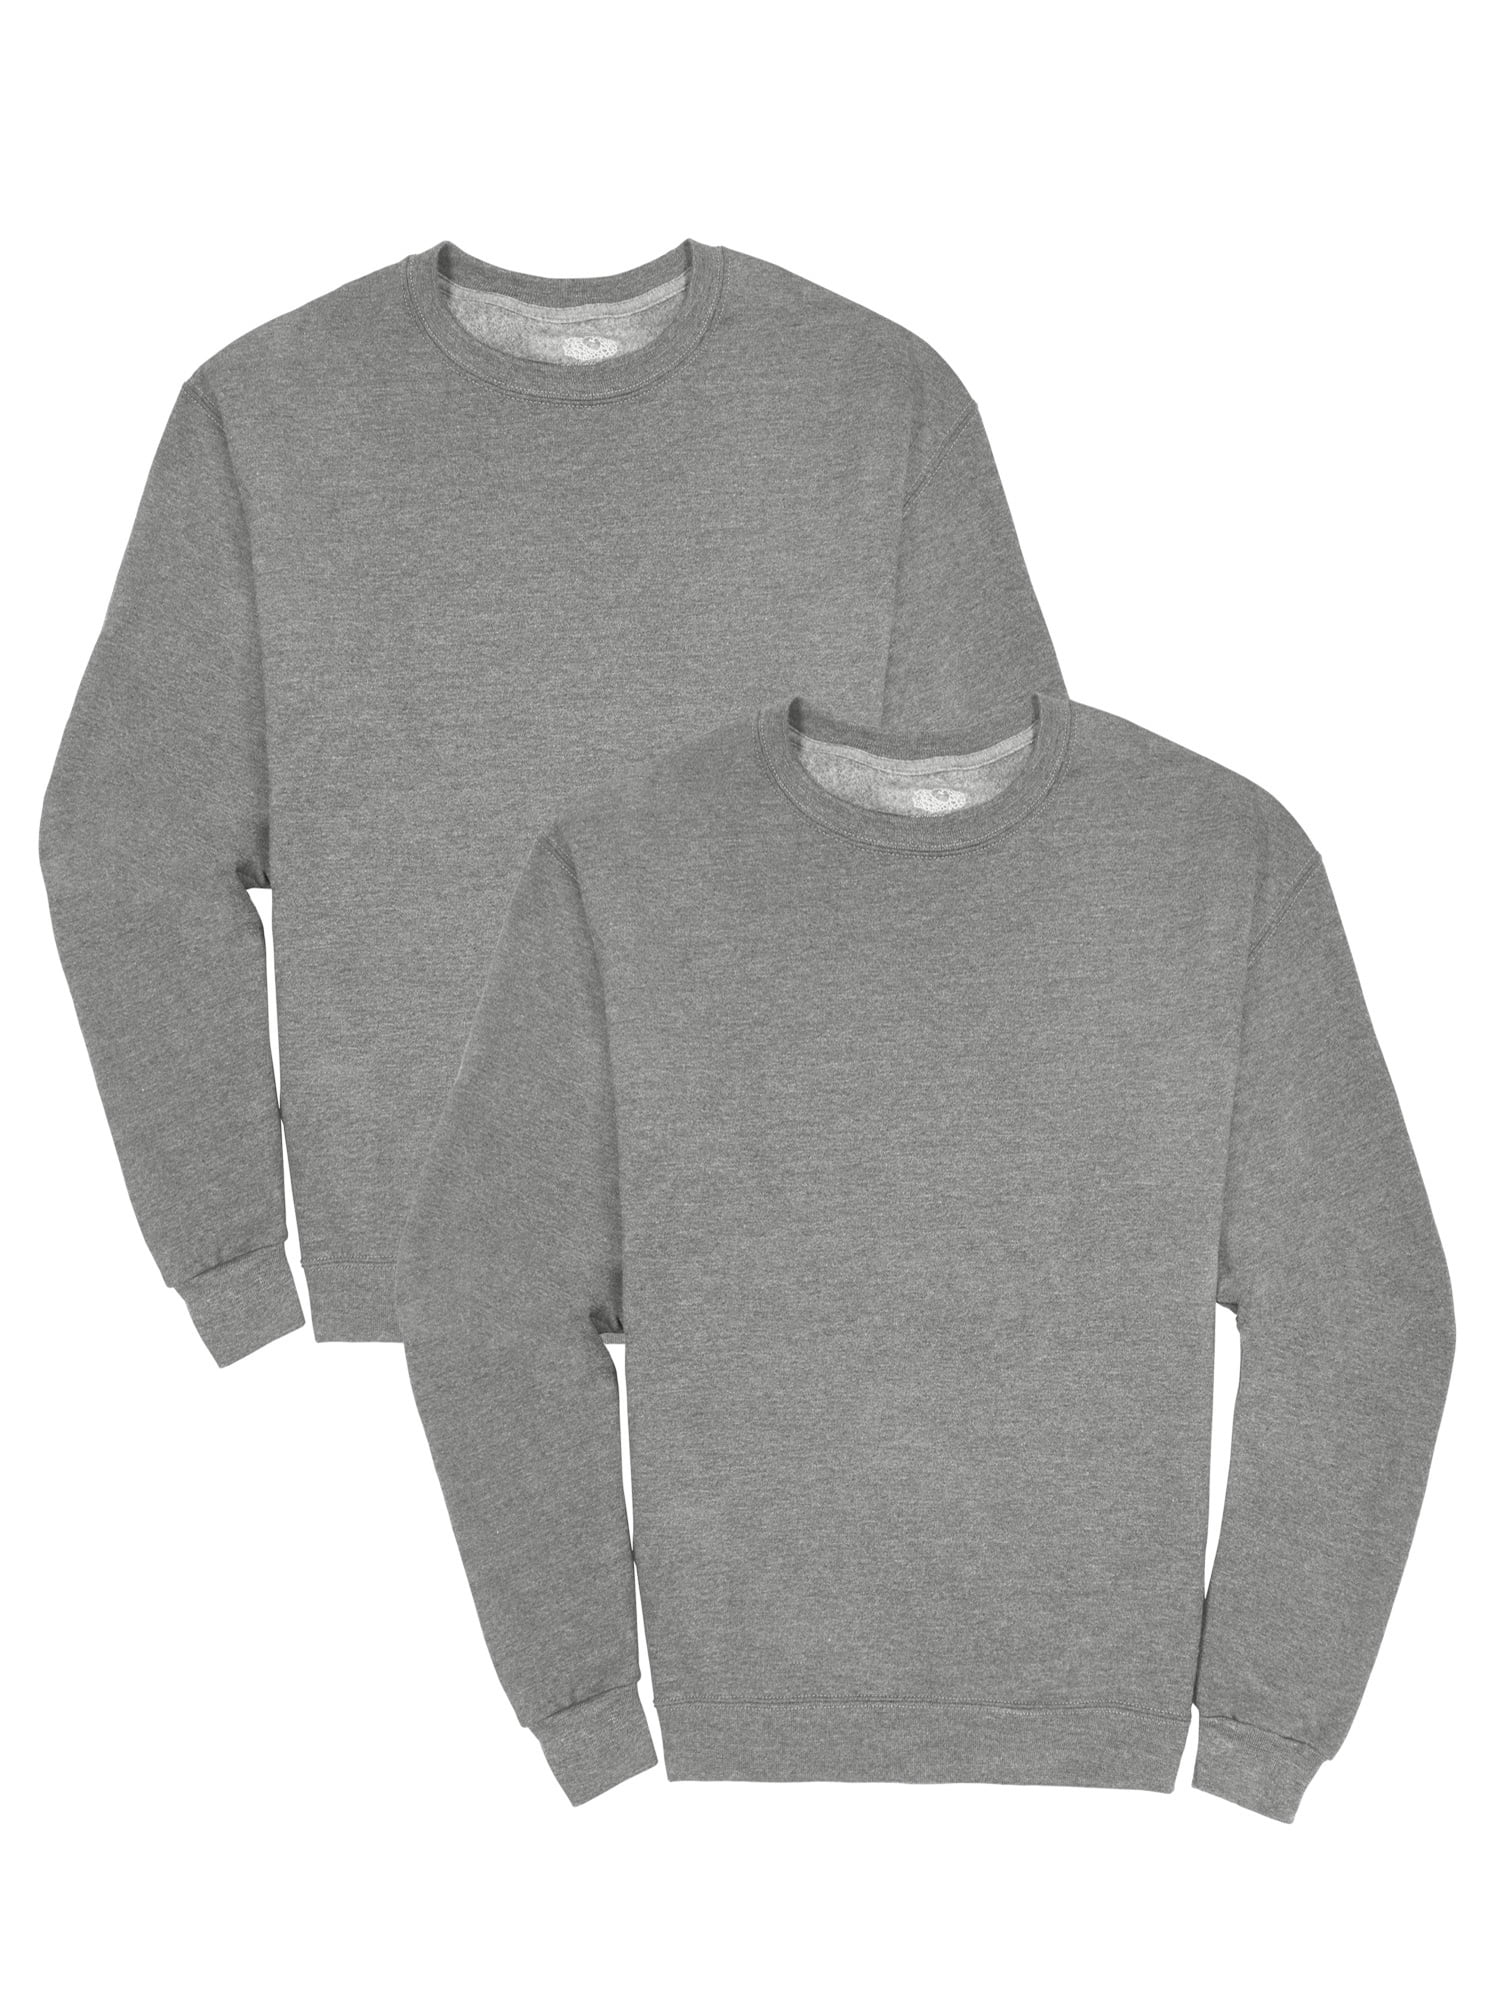 2 Pack Fruit of the Loom Men's Poly/Cotton Lightweight Raglan Sweatshirt Jumper